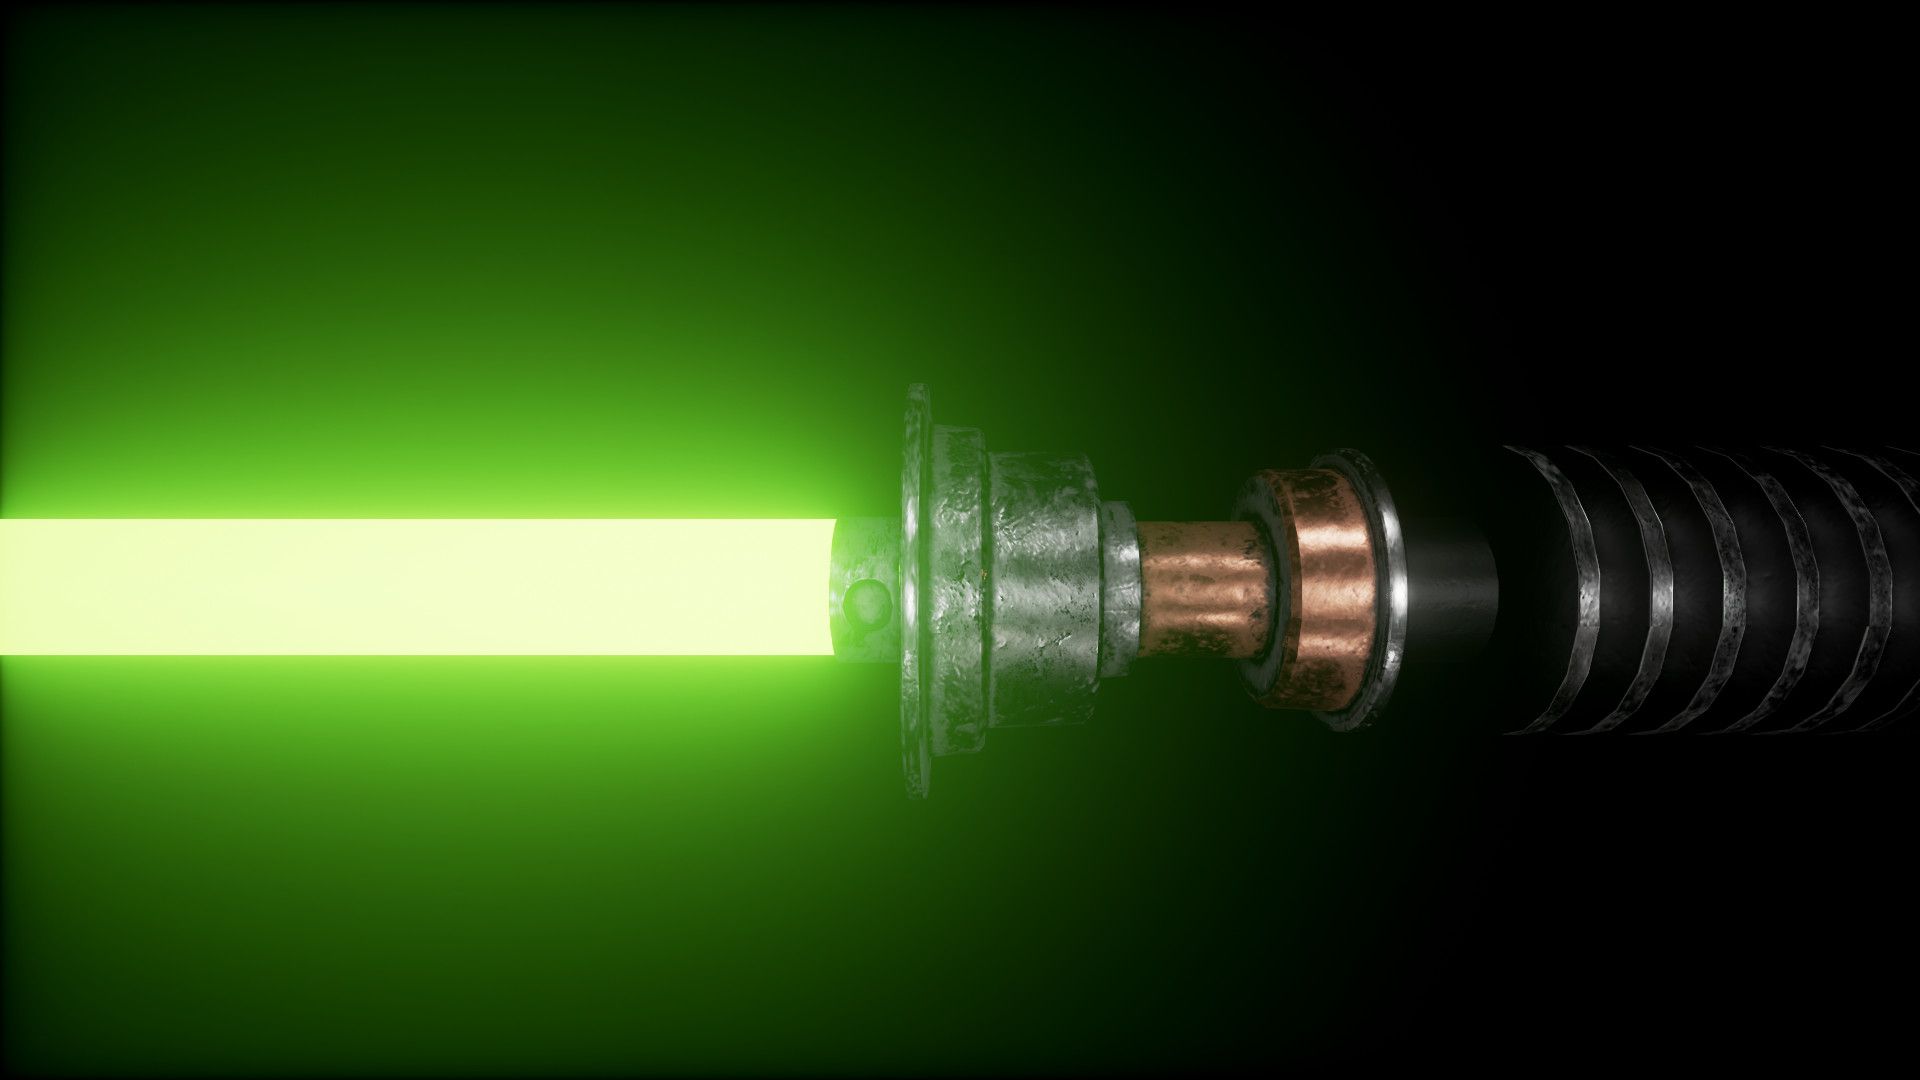 Star Wars Lightsaber, Luke Skywalker (Episode VI: Return Of The Jedi), Matthew Cummins